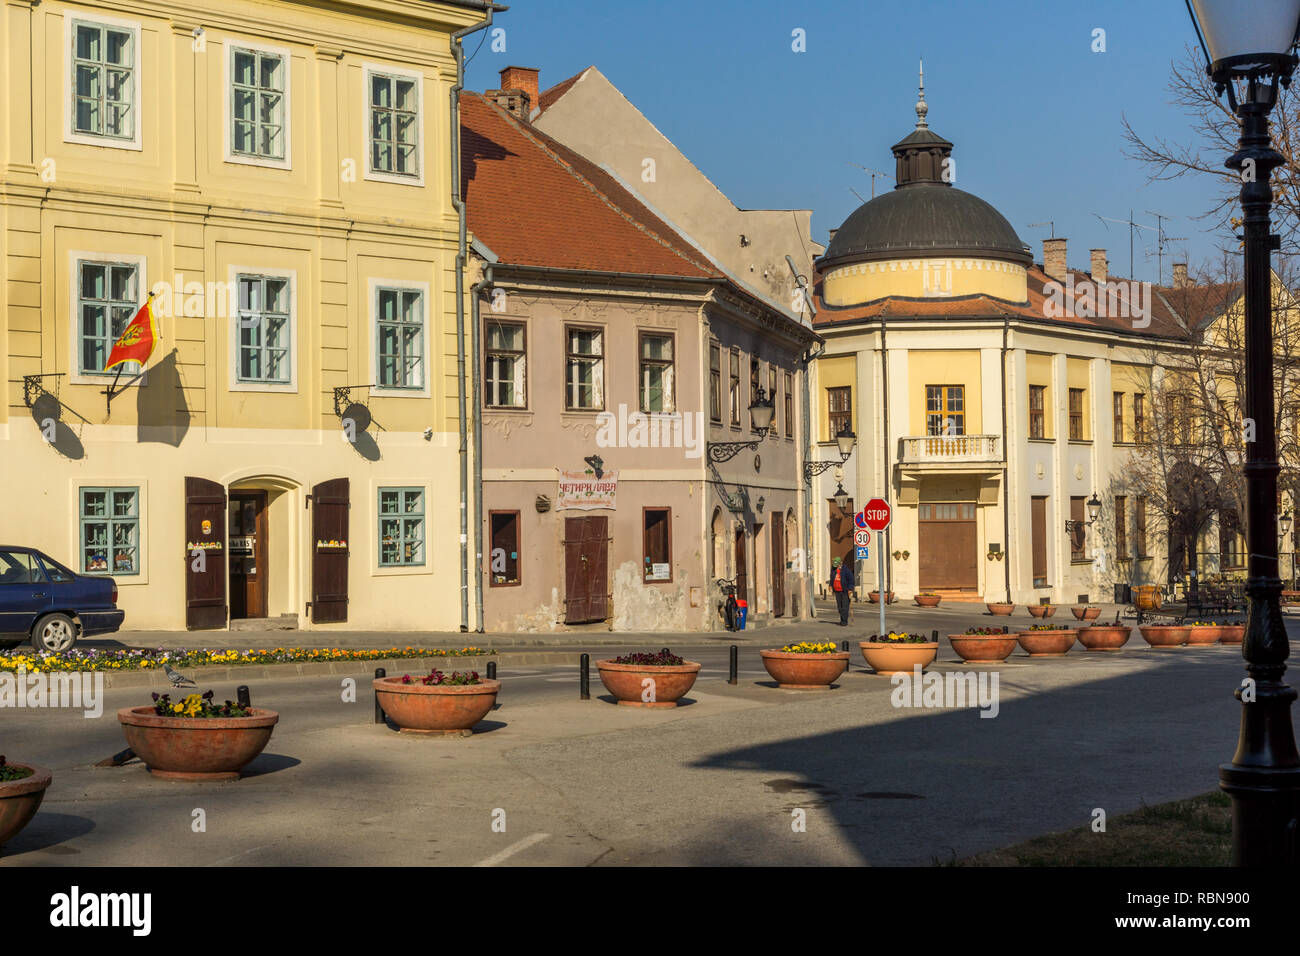 SREMSKI KARLOVCI, VOJVODINA, SERBIA - NOVEMBER 11, 2018: Panorama of center of town of Srijemski Karlovci, Vojvodina, Serbia Stock Photo